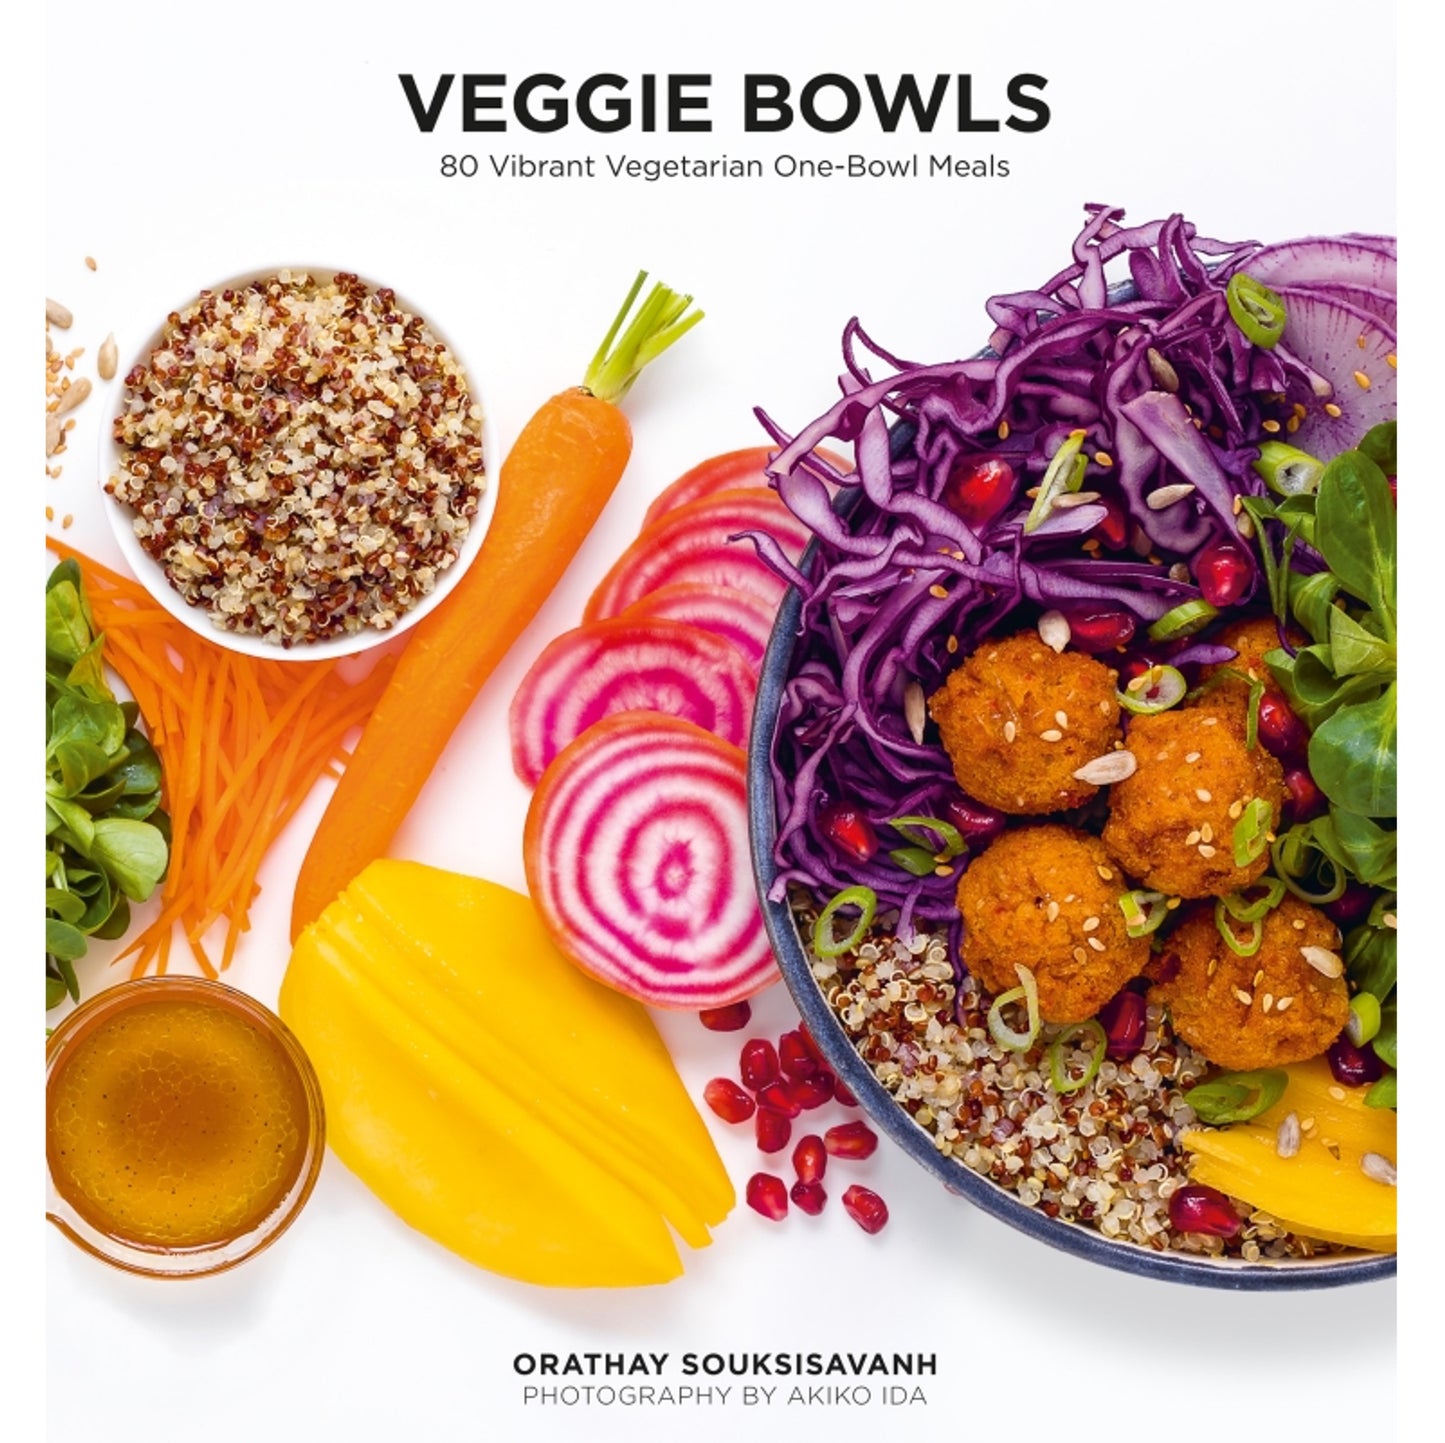 Veggie Bowls